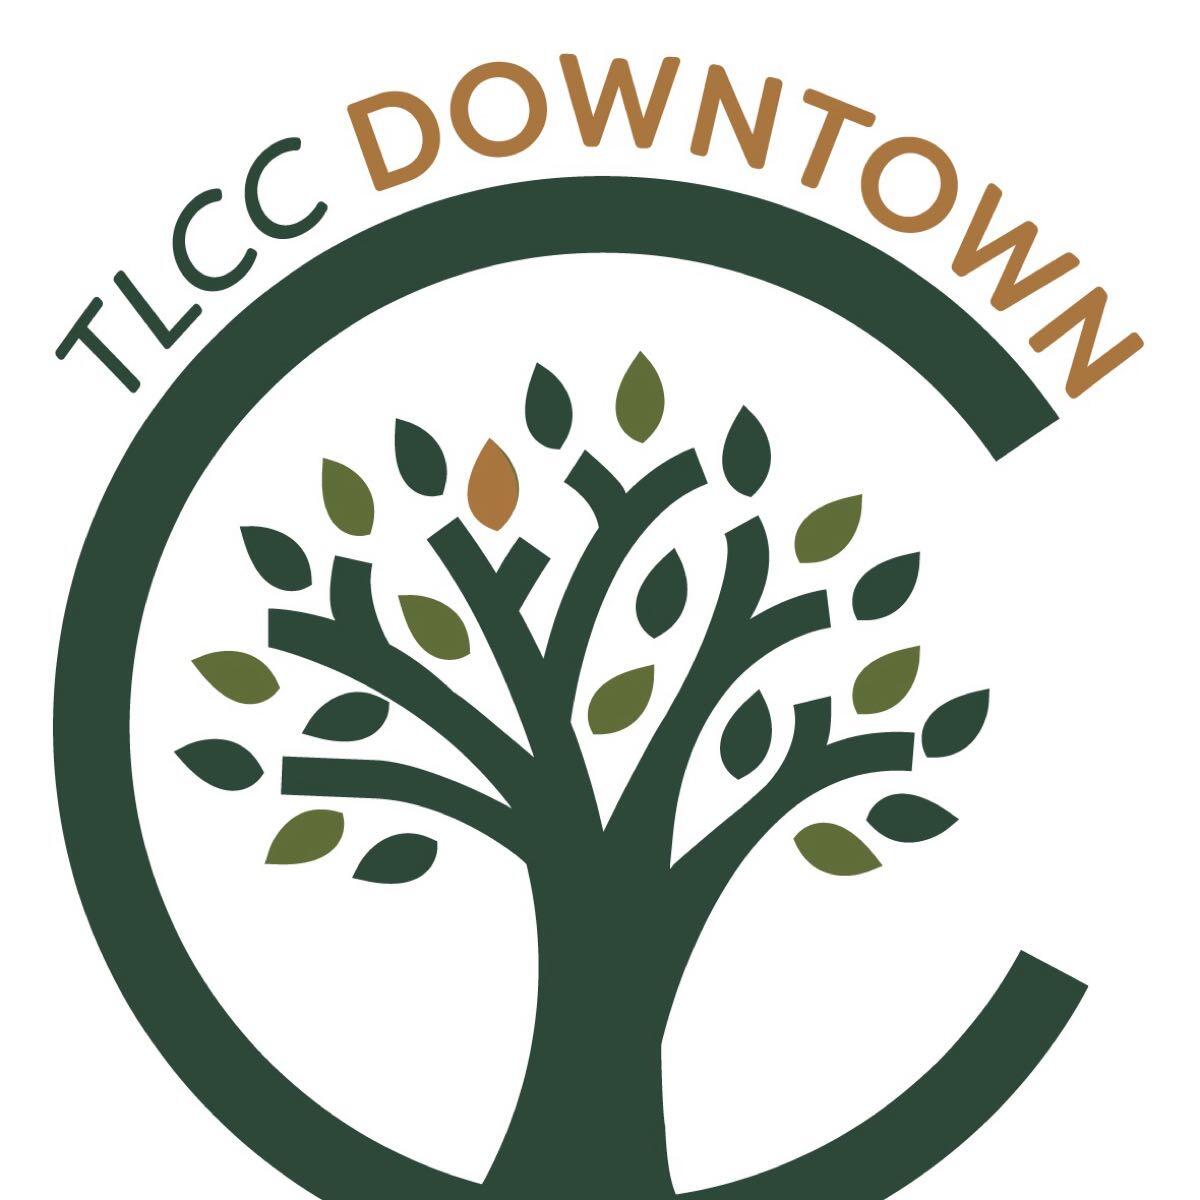 TLCC Downtown - Colorado Springs, CO - Nextdoor